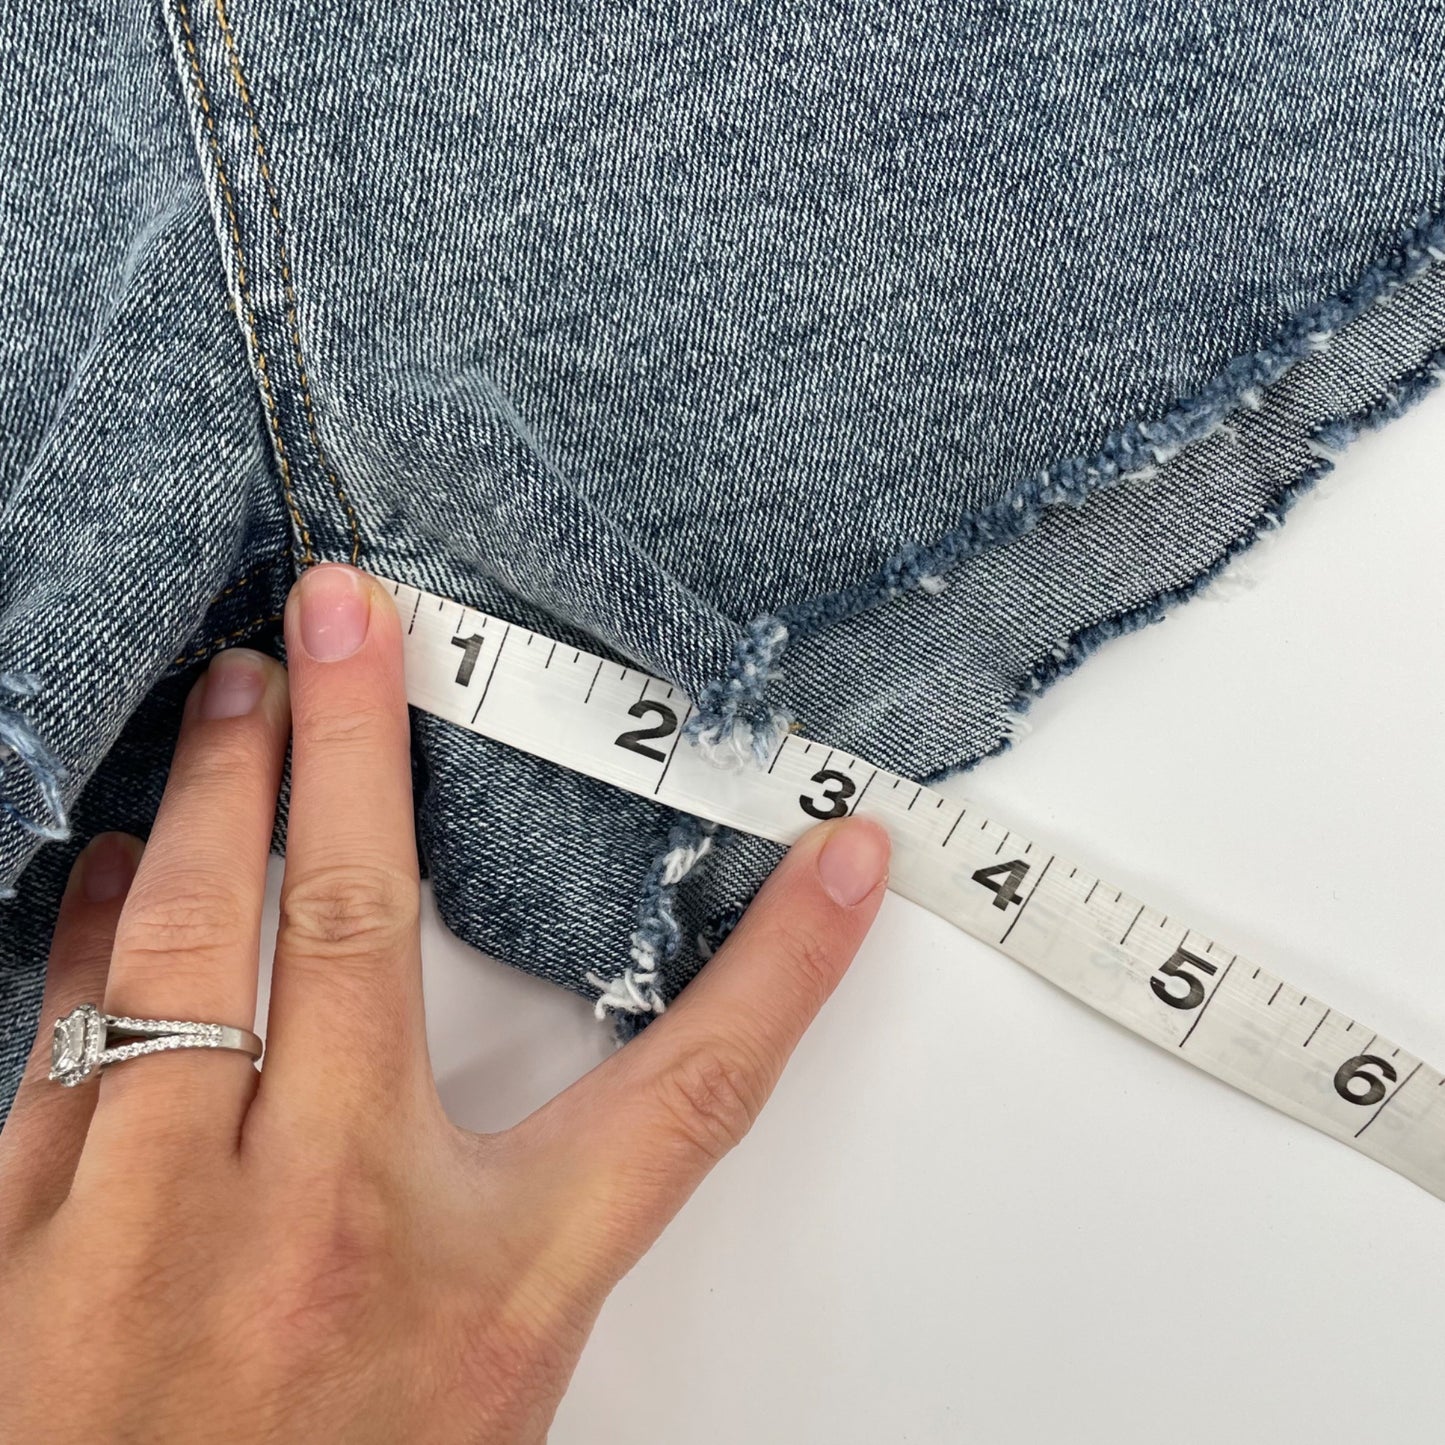 Ader Error Korean Cinder Leather Pocket High Rise Denim Shorts Womens Size 24